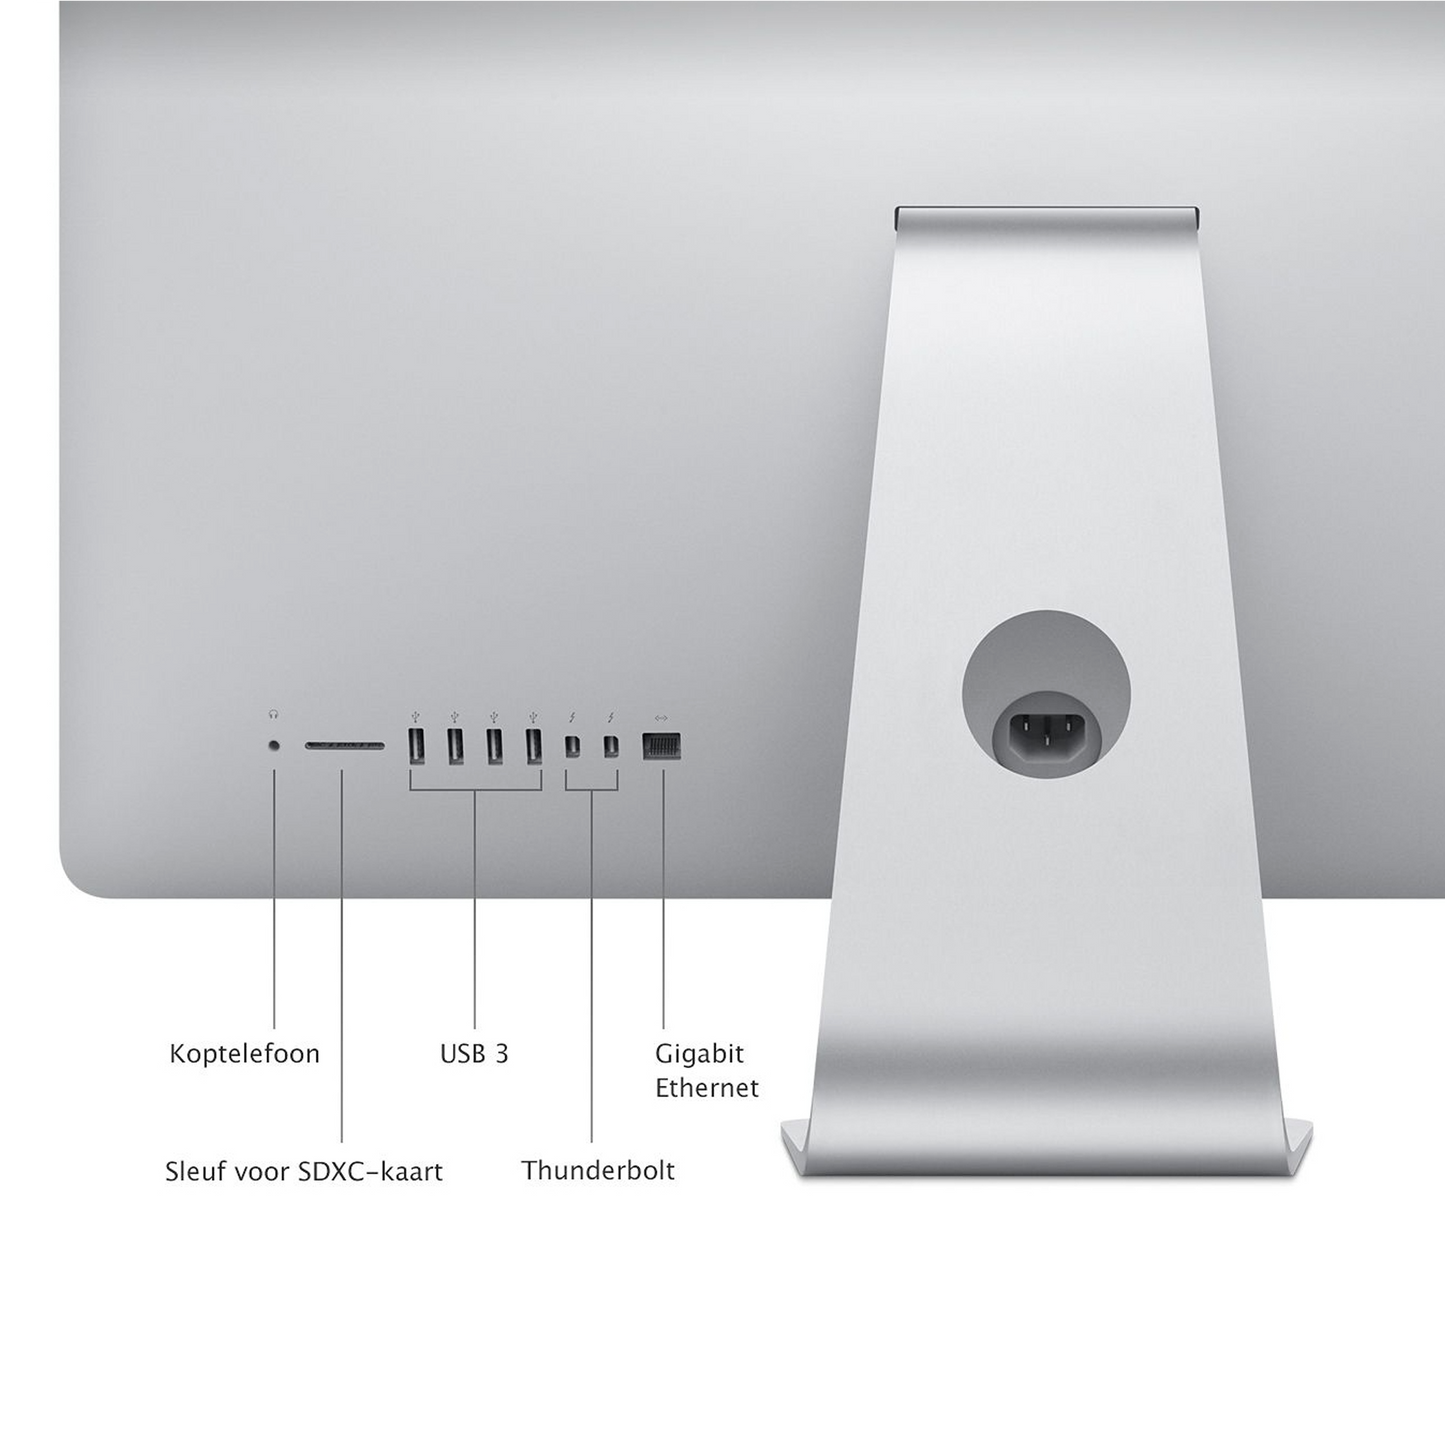 Refurbished iMac 21.5" i5 2.3 8GB 256GB - test-product-media-liquid1